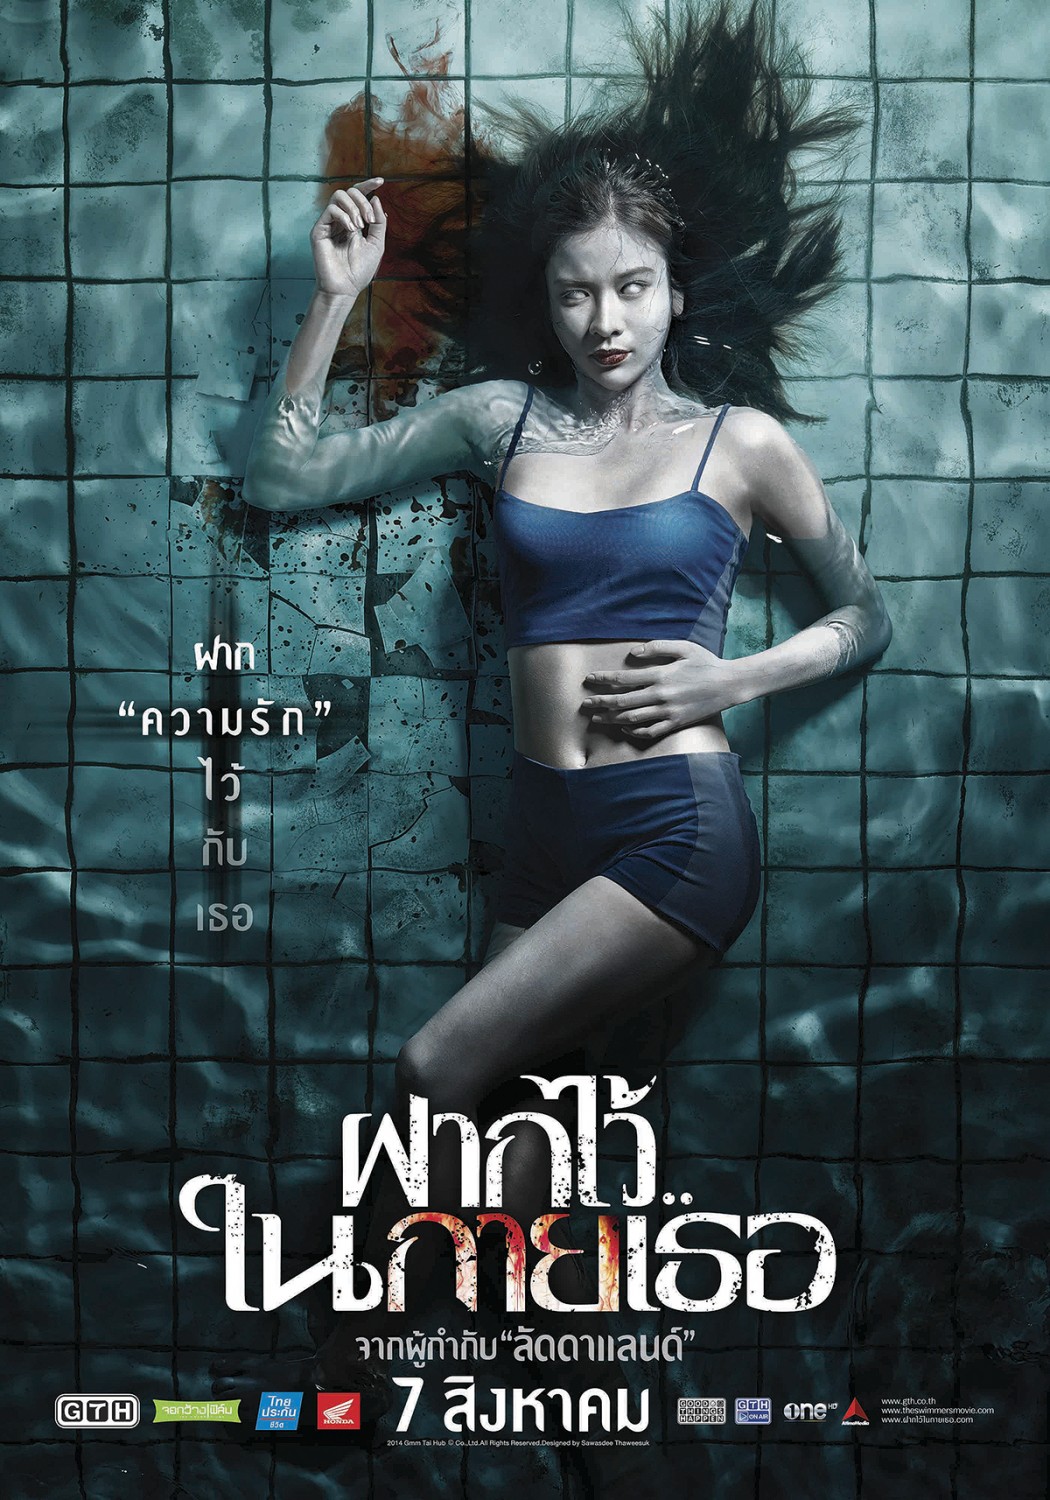 Extra Large Movie Poster Image for Fak wai nai gai thoe (#3 of 4)